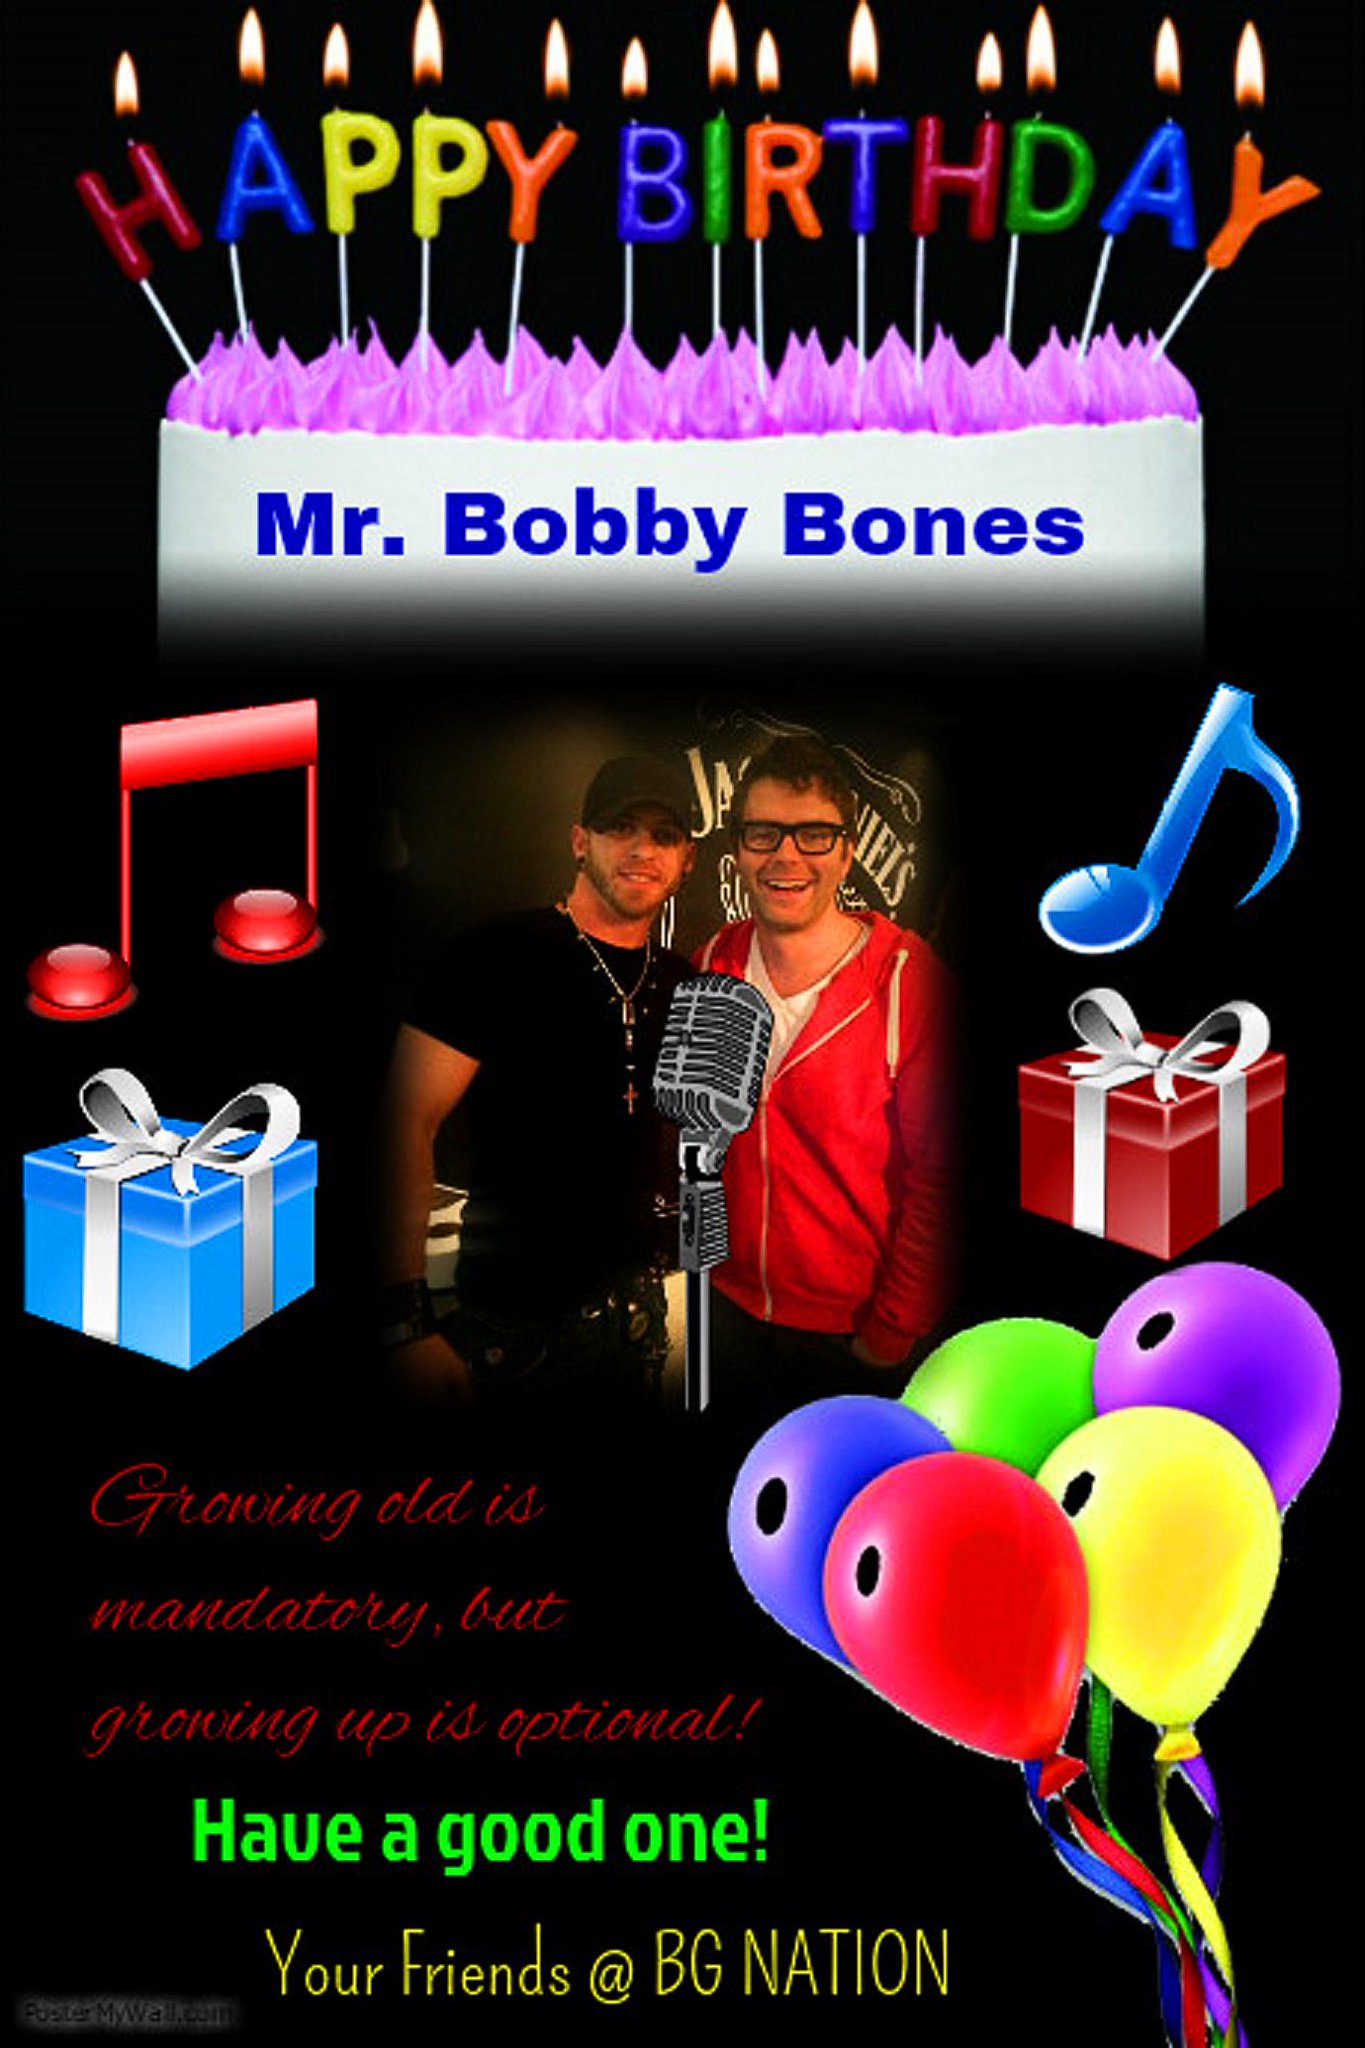   HAPPY BIRTHDAY, MR. BOBBY BONES, AND MANY MORE~   